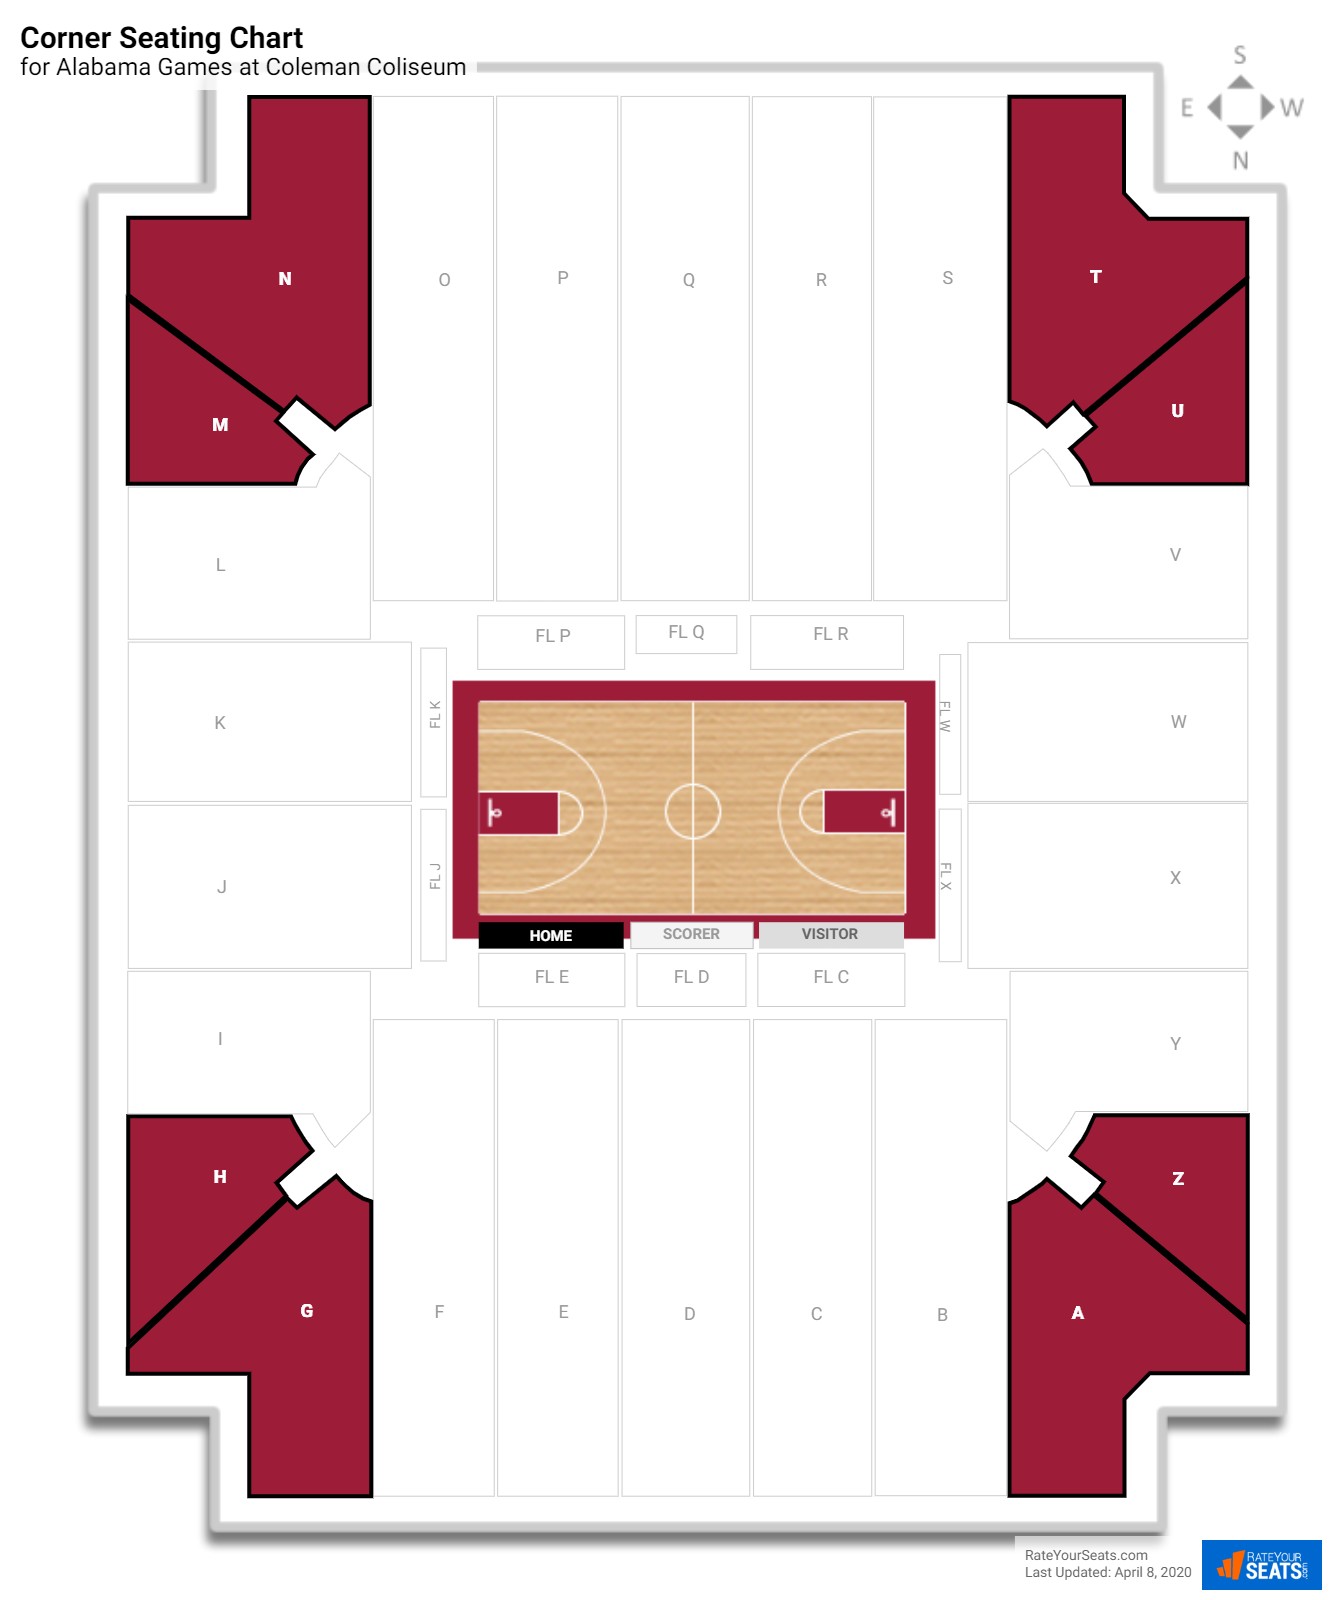 Coleman Coliseum Seating Chart Basketball